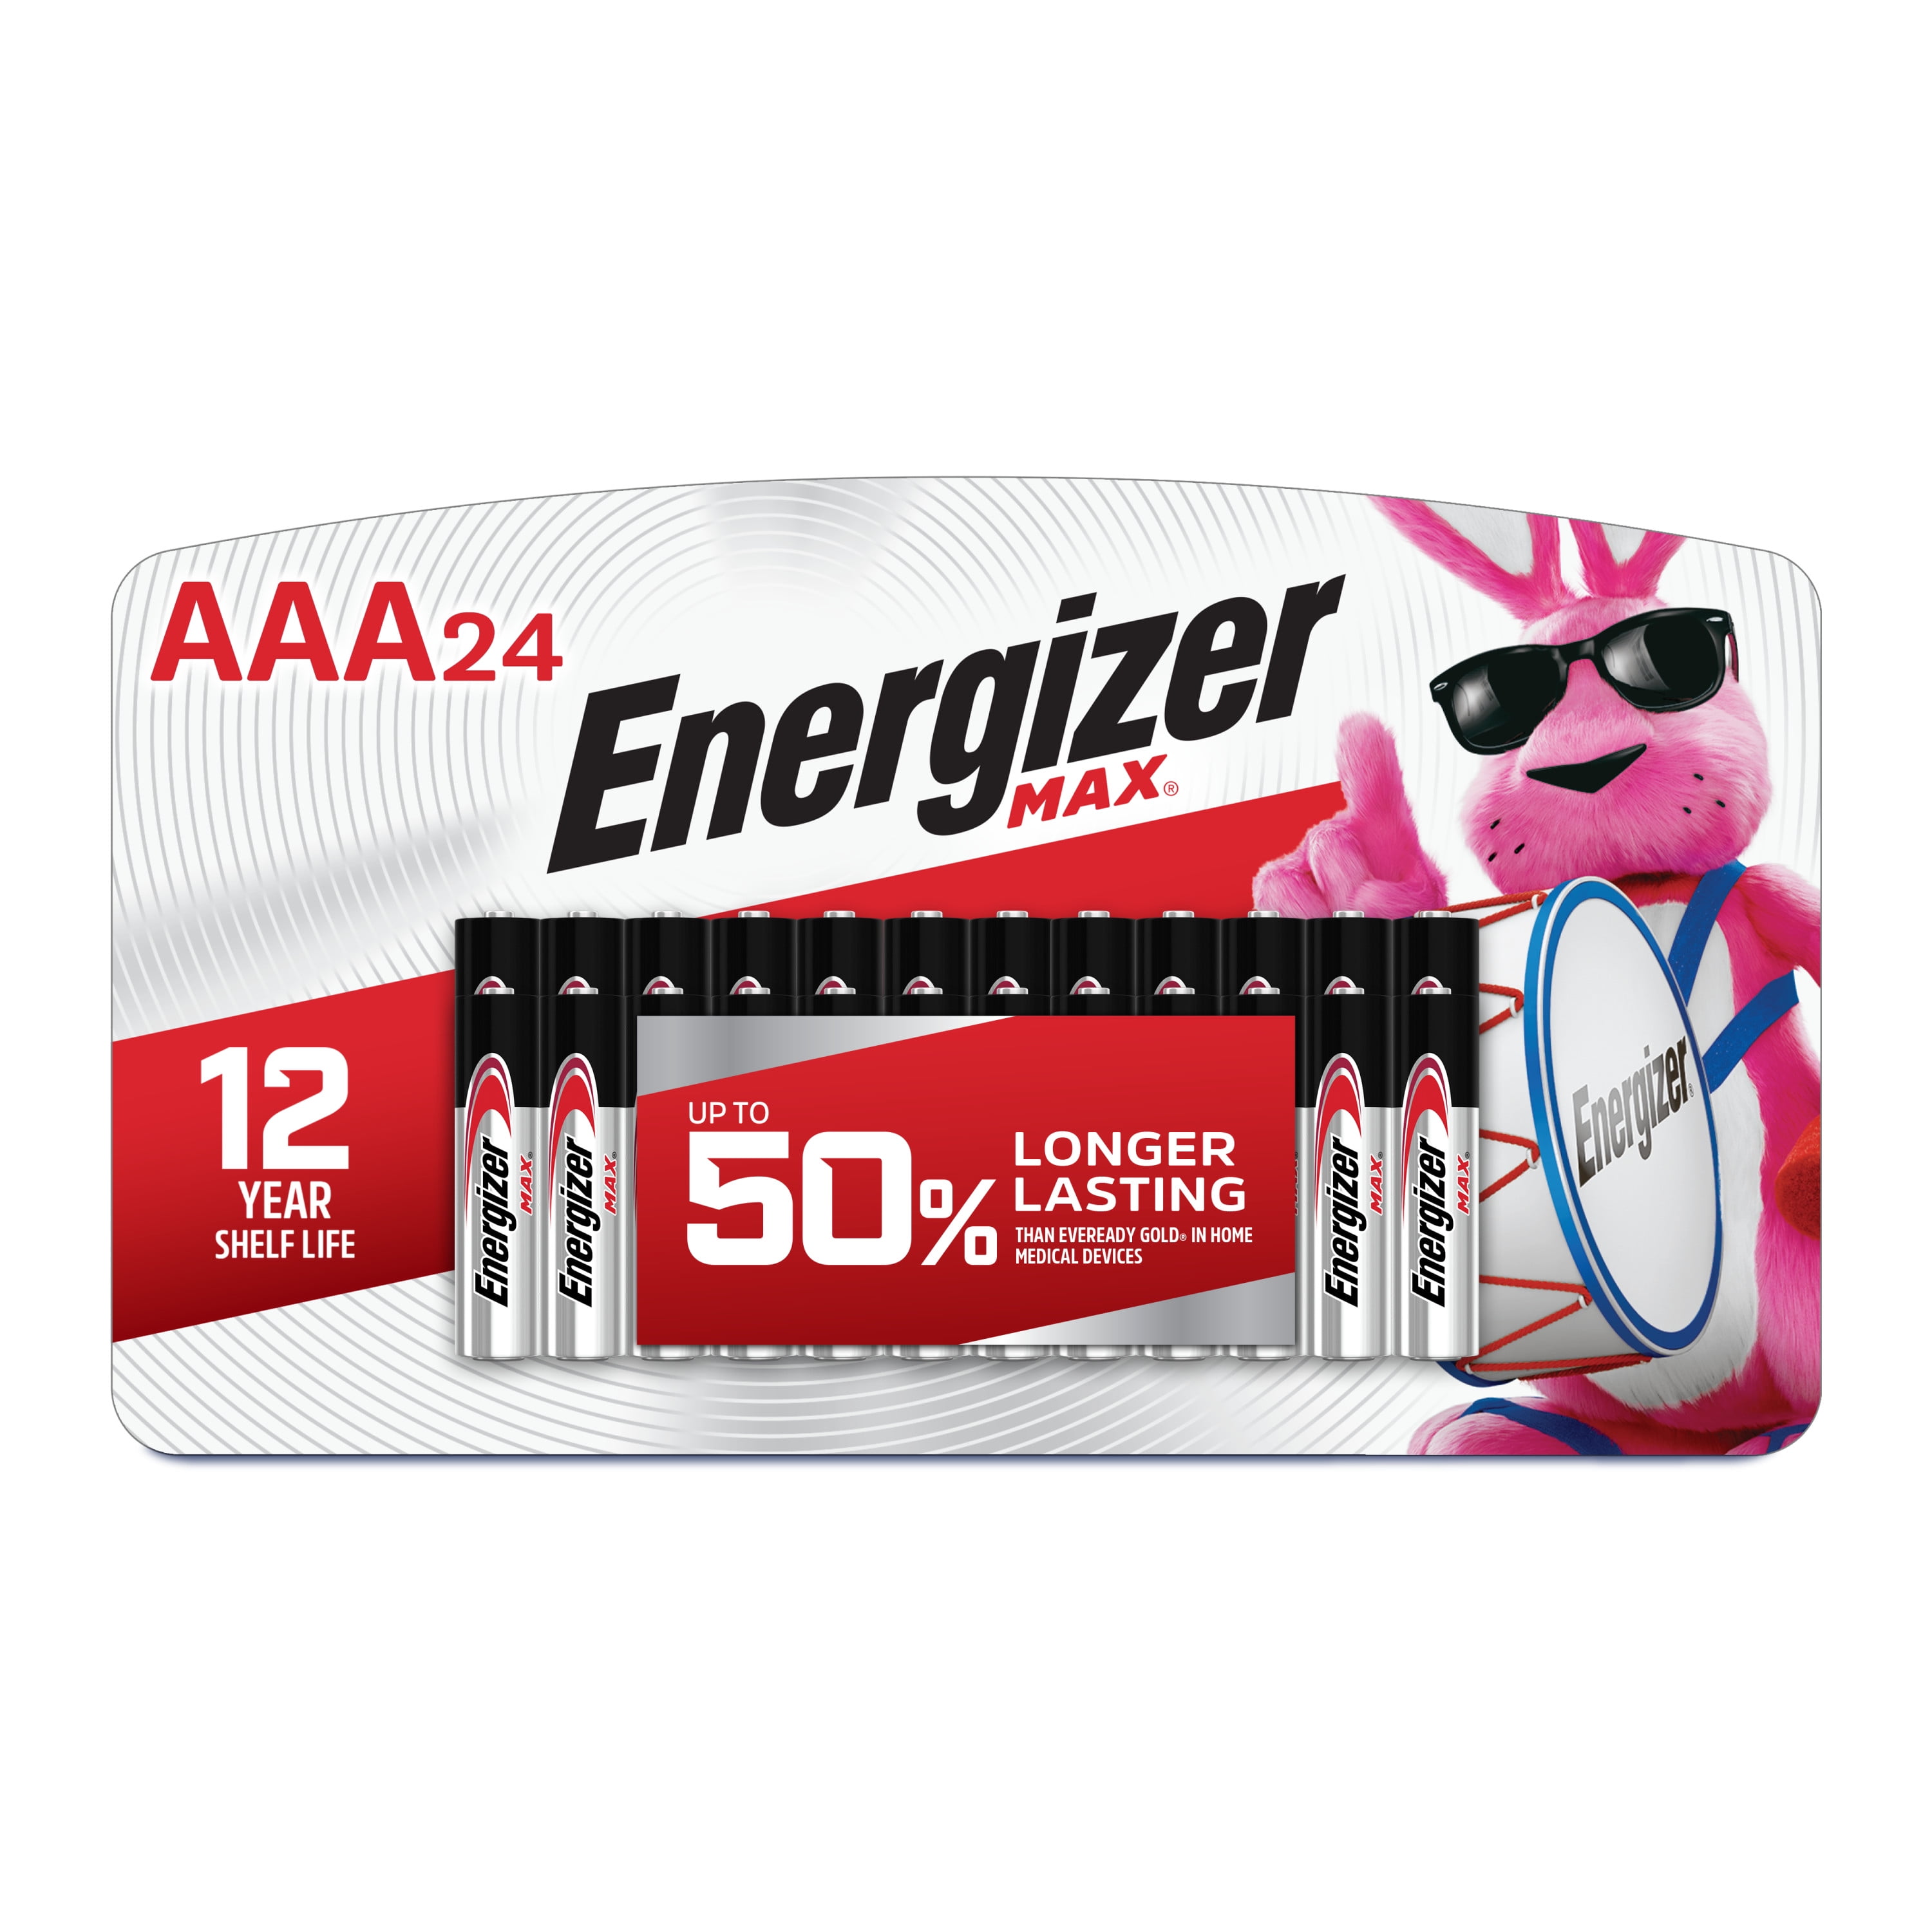 MAX Pack), Batteries AAA Alkaline (24 Batteries Triple A Energizer